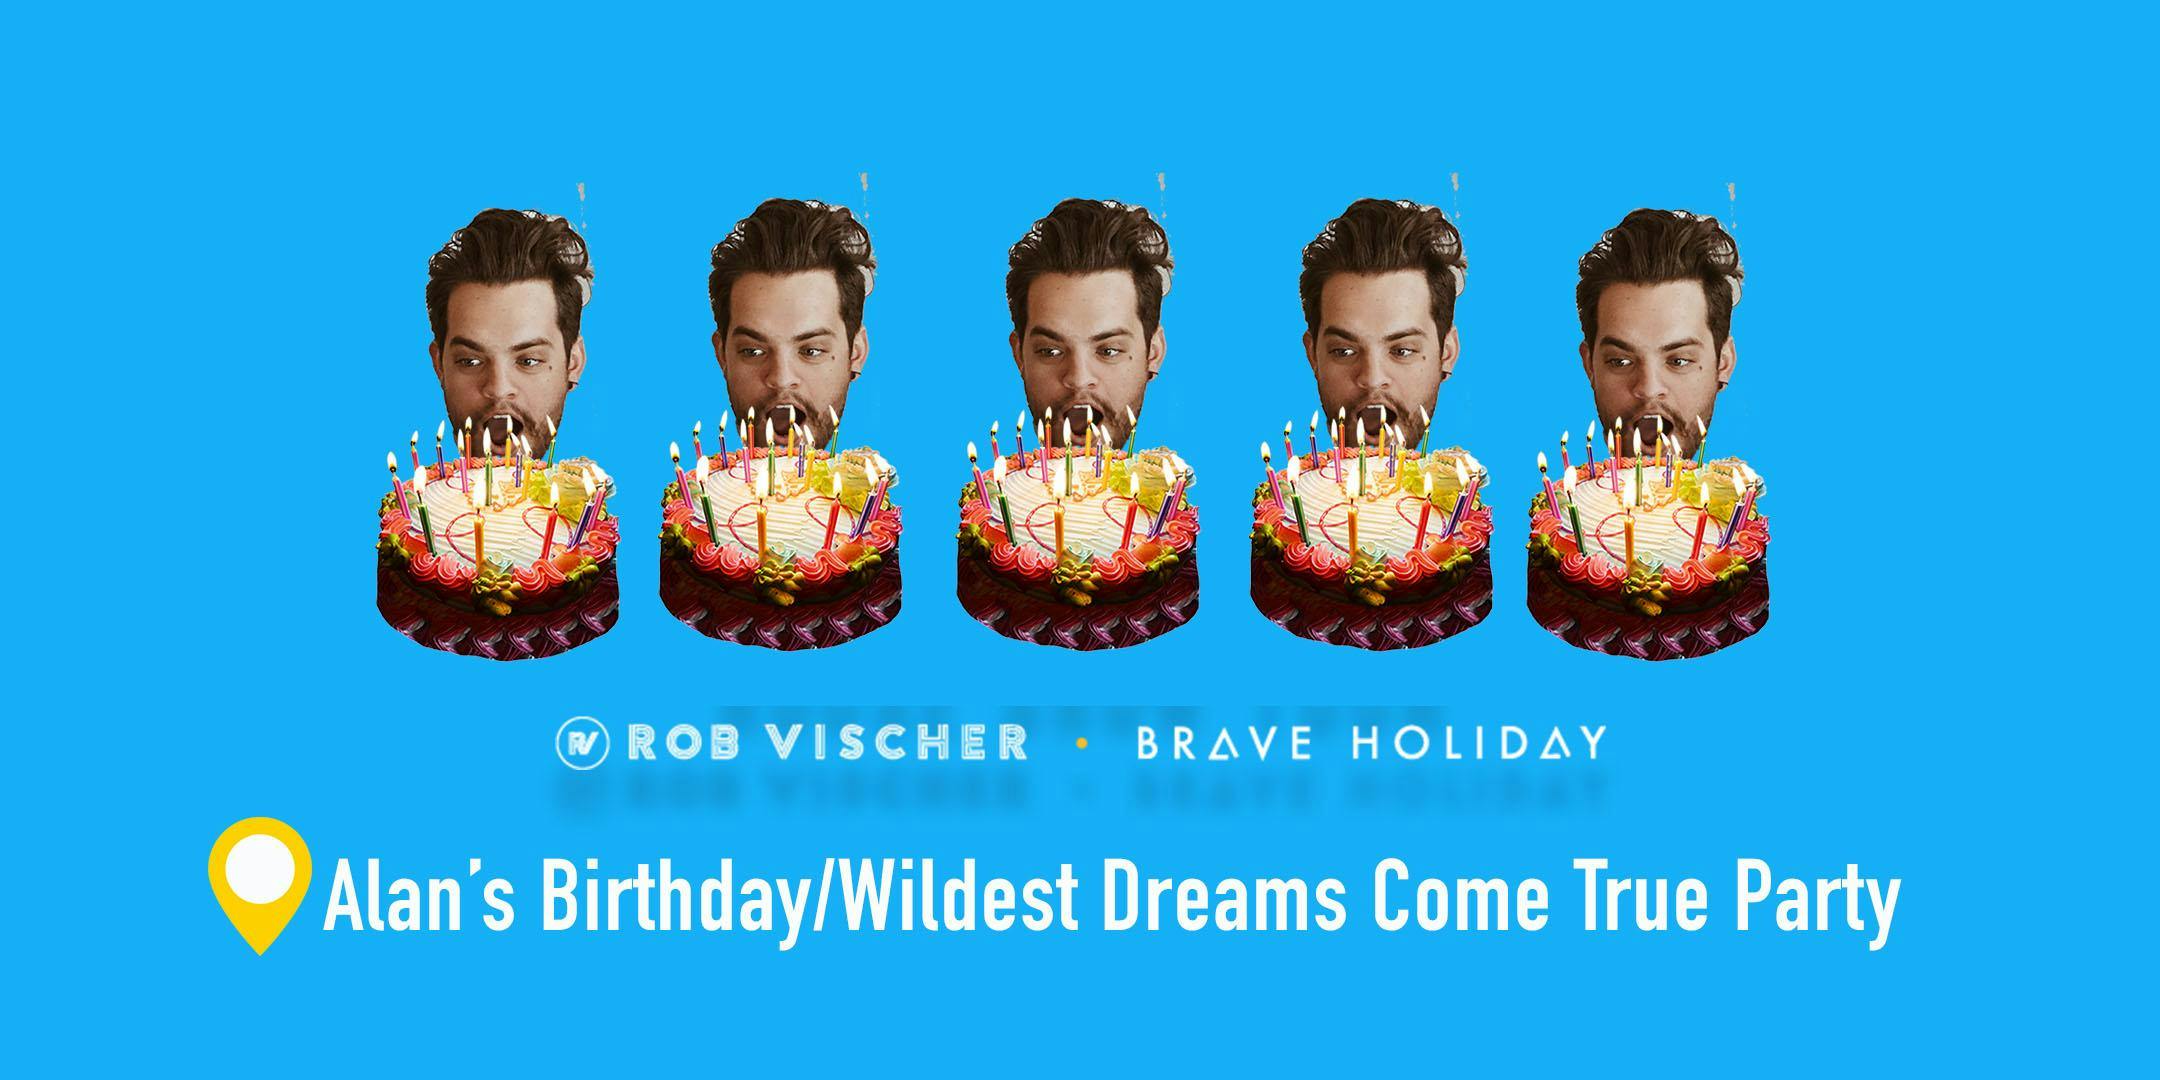 Brave Holiday & Rob Vischer: Alan's Birthday/Wildest Dreams Come True Party